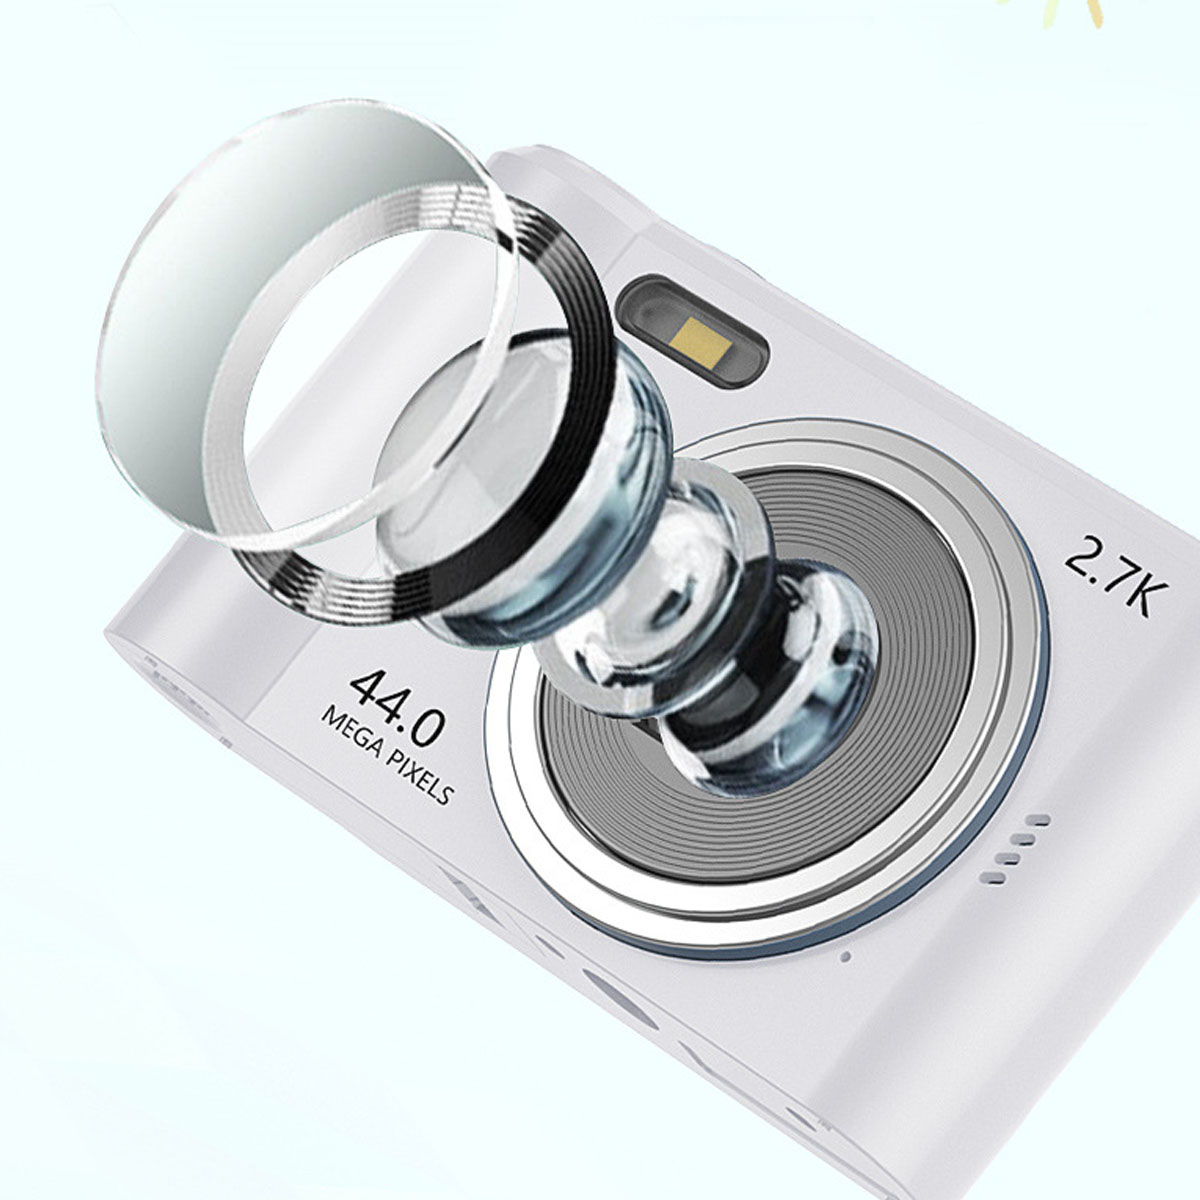 HD SYNTEK Kamera Weiß Digitalkamera Kamera Smart weiß, Digitalkamera Reisen Zoom Täglich LCD- Tragbar 8x